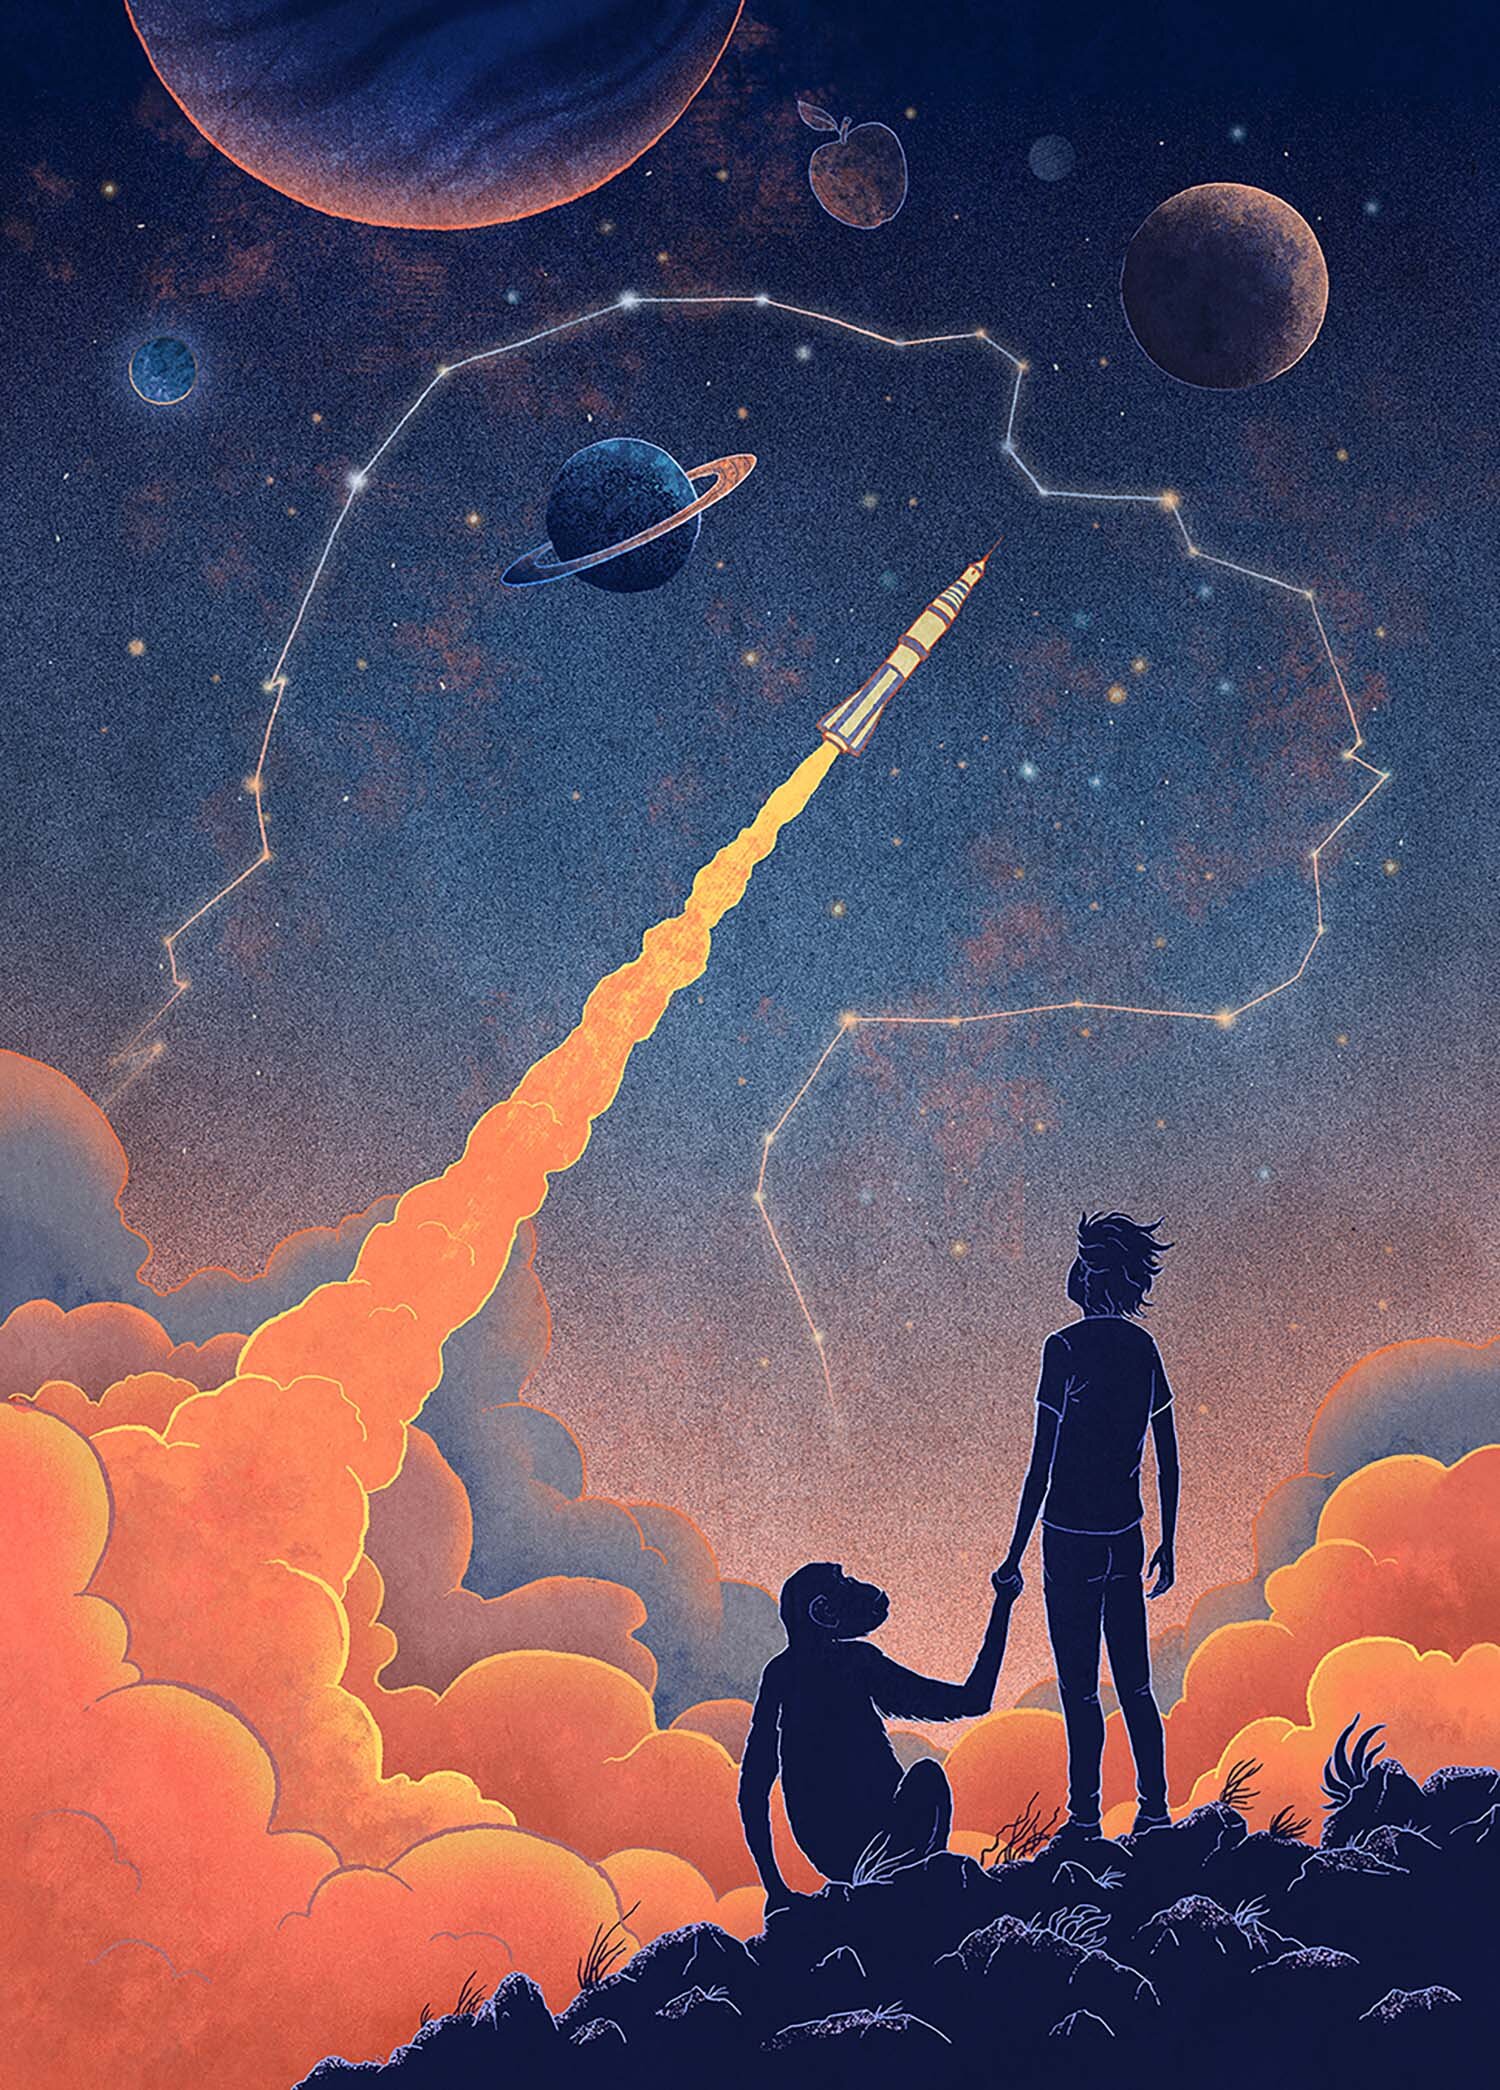 antoine-dore-space-rocket-book-cover-illustration.jpg